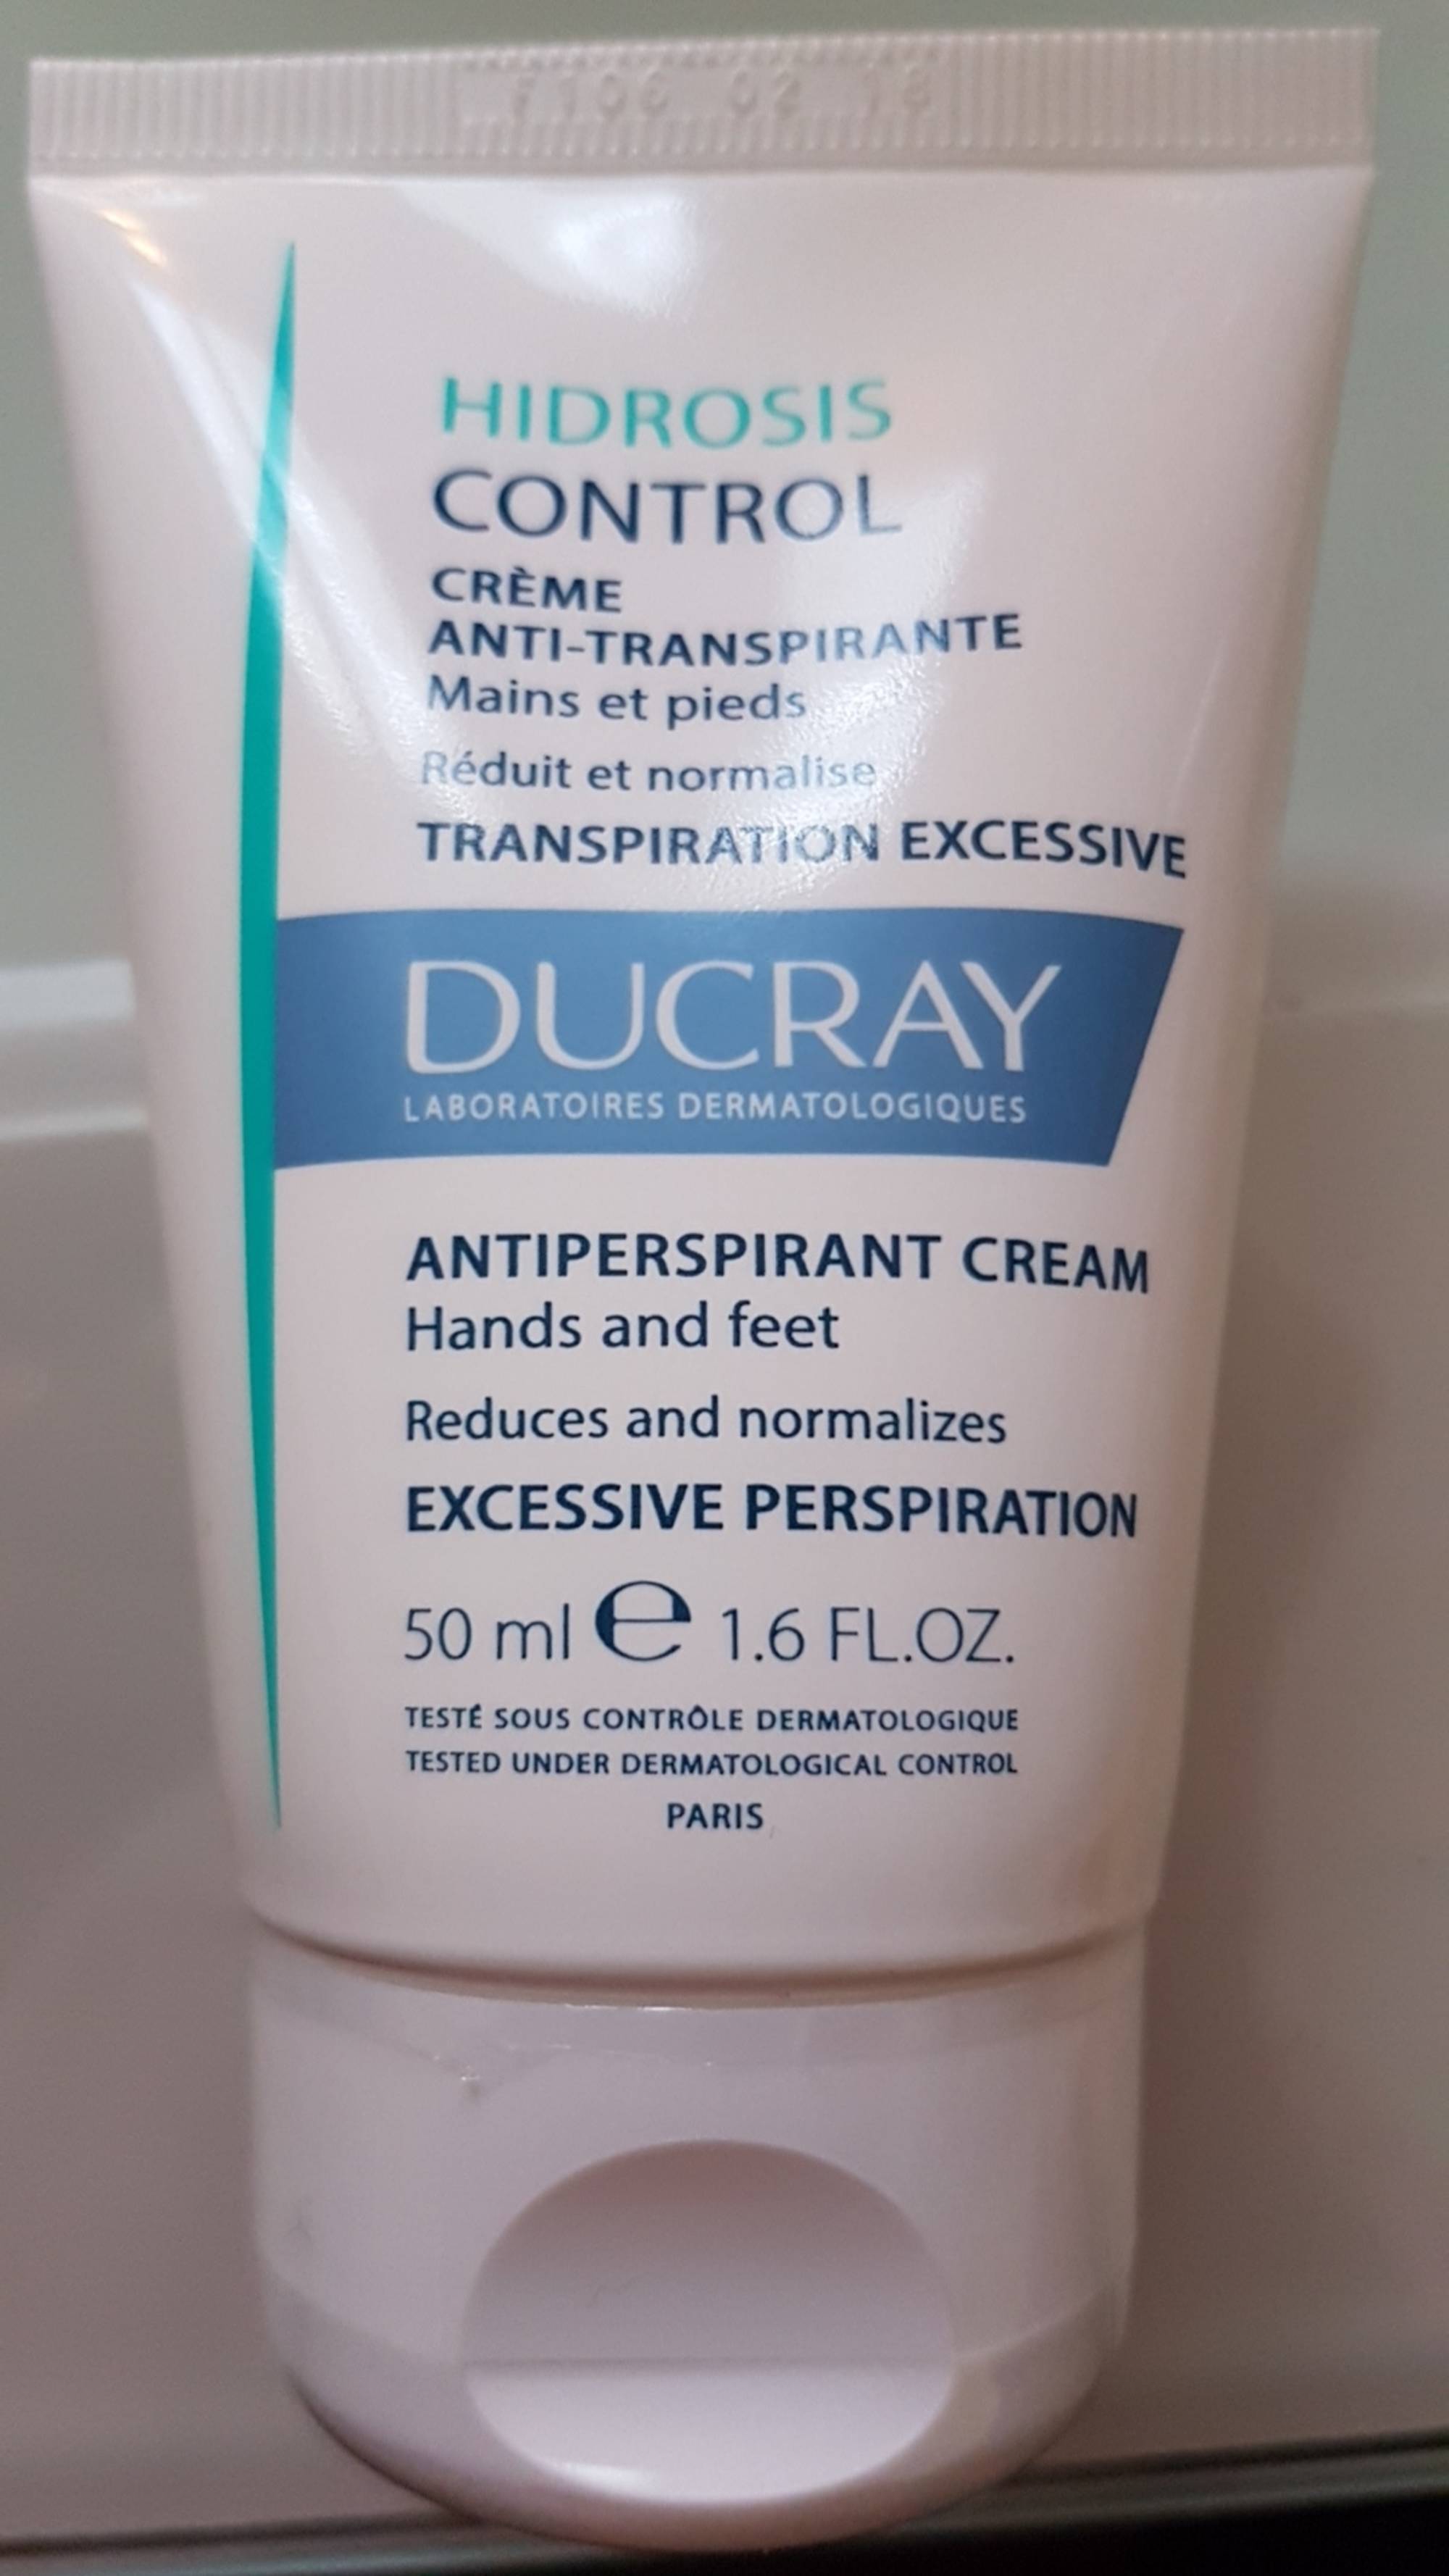 DUCRAY - Hidrosis control - Crème anti-transpirante mains et pieds